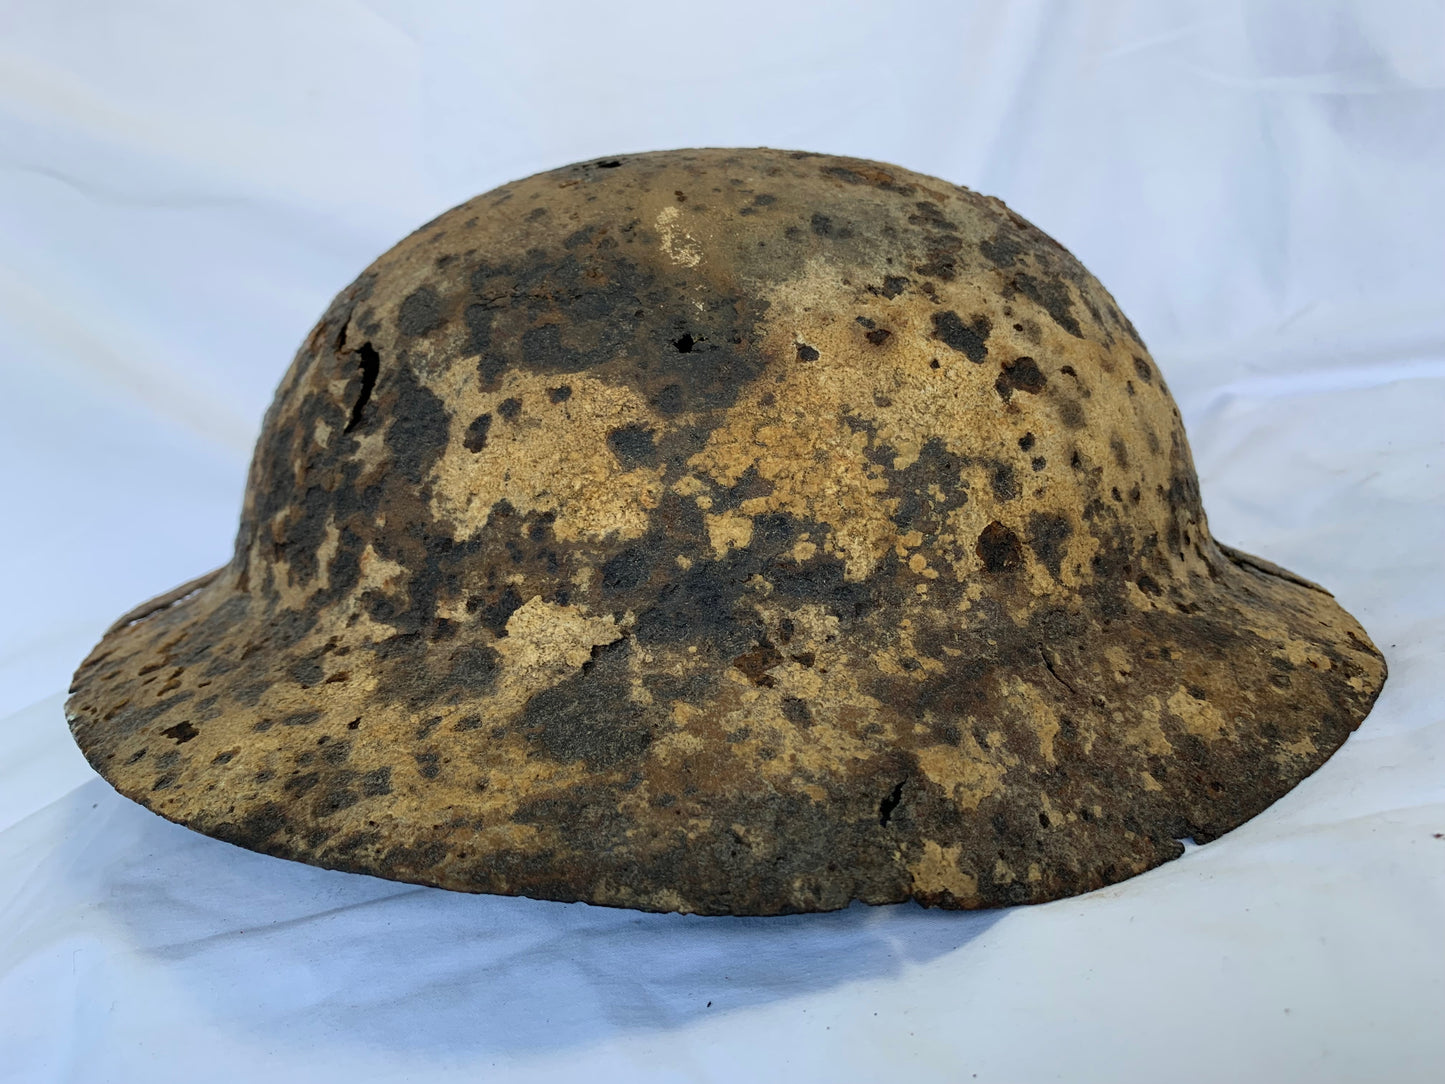 WW1 British Brodie Helmet recovered from the battle of Passchendaele 1917